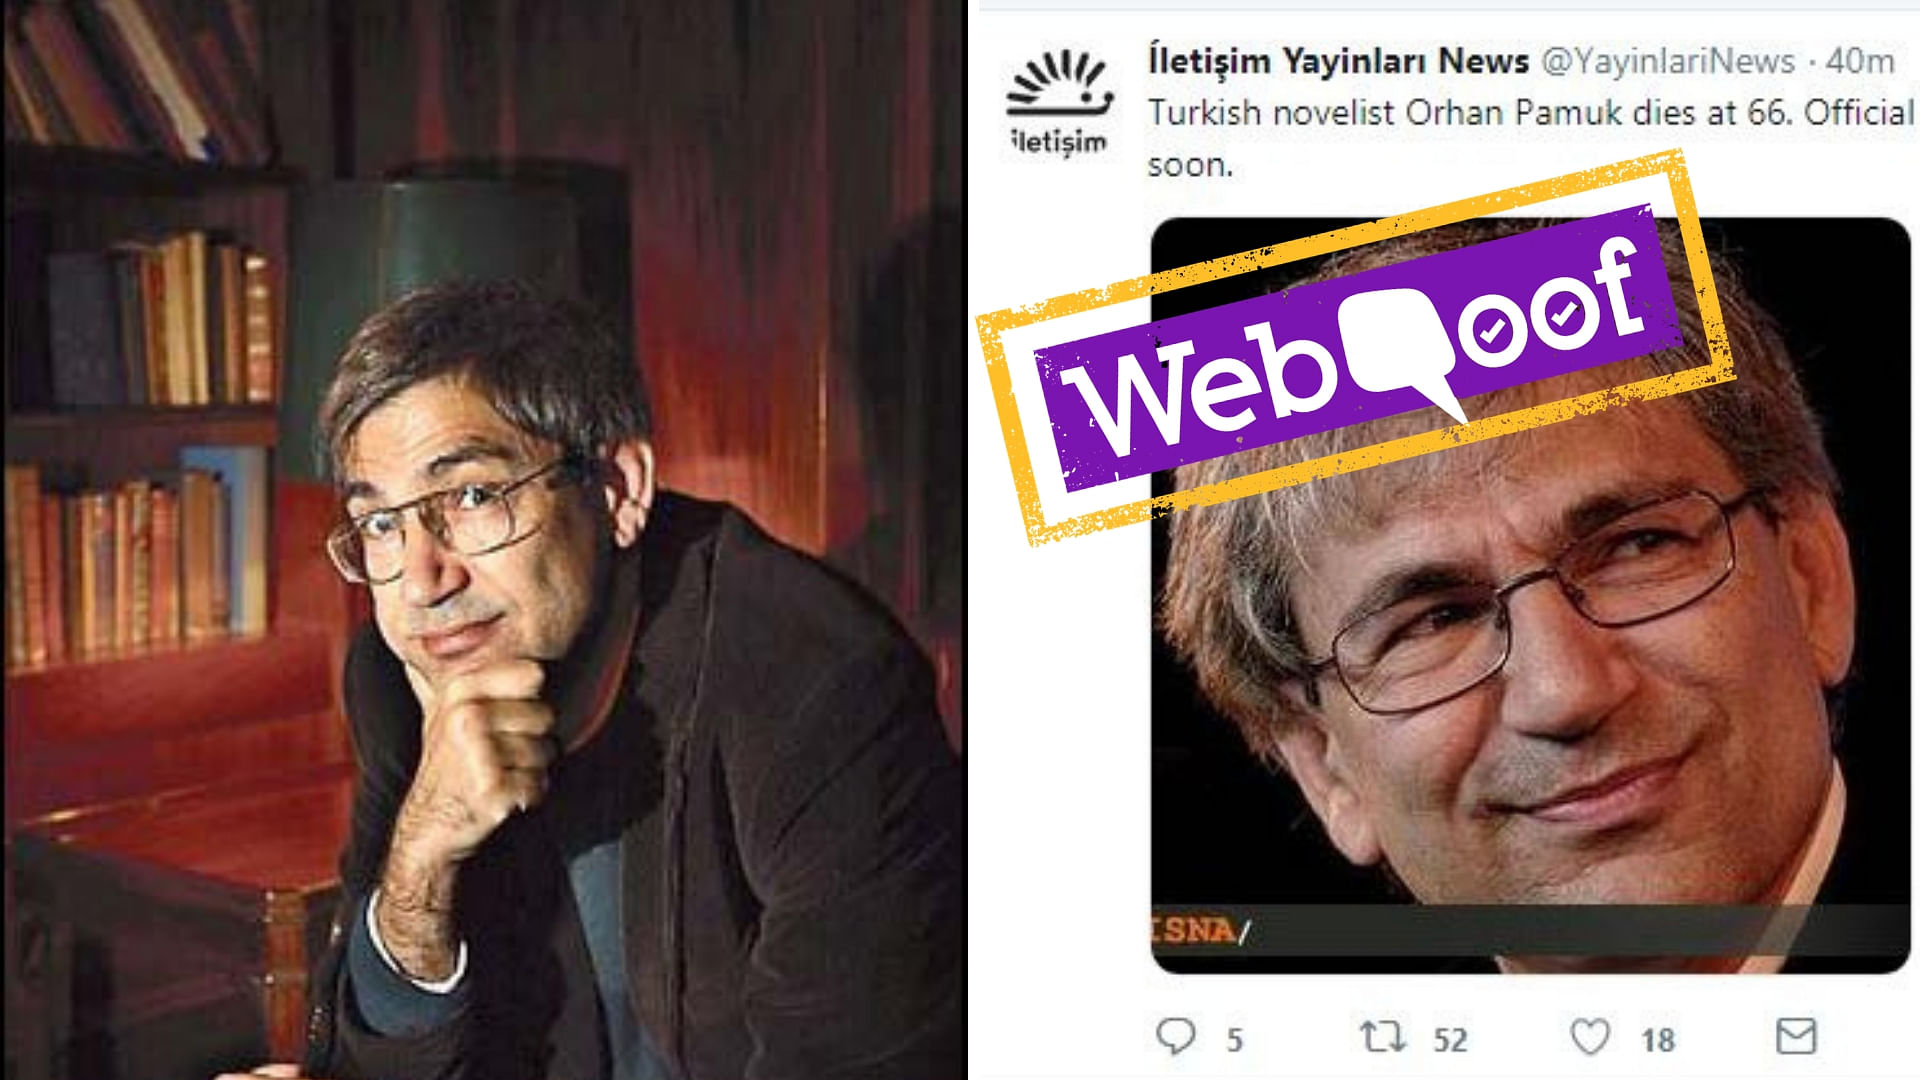 Orhan Pamuk, Nobel Prize-Winning Turkish Author, is Not Dead!